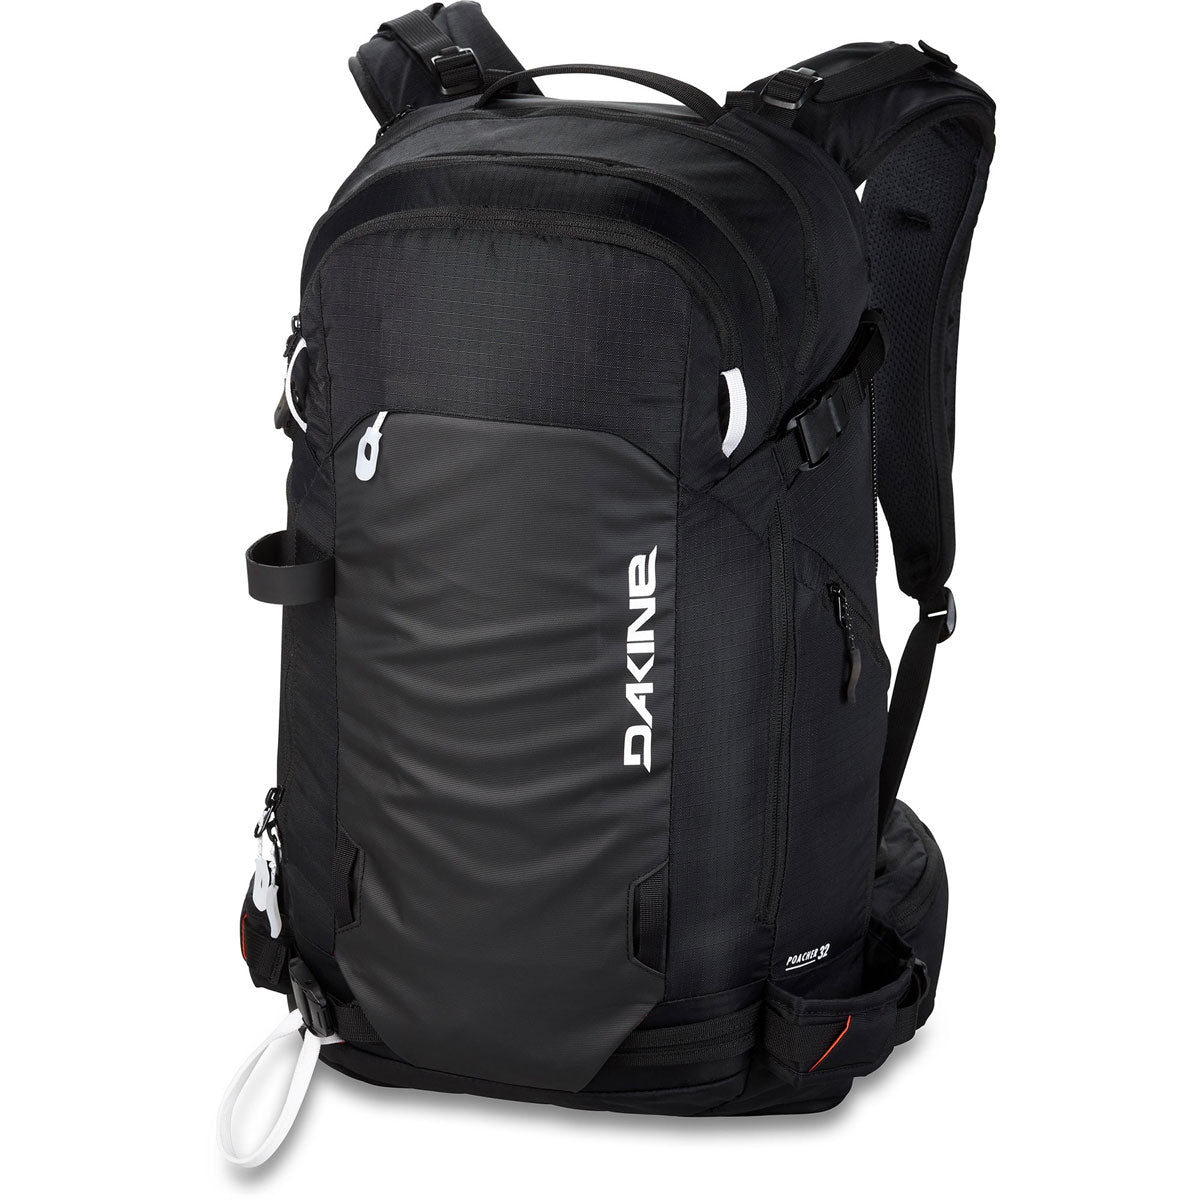 Dakine Poacher 32l Backpack - Black image 1